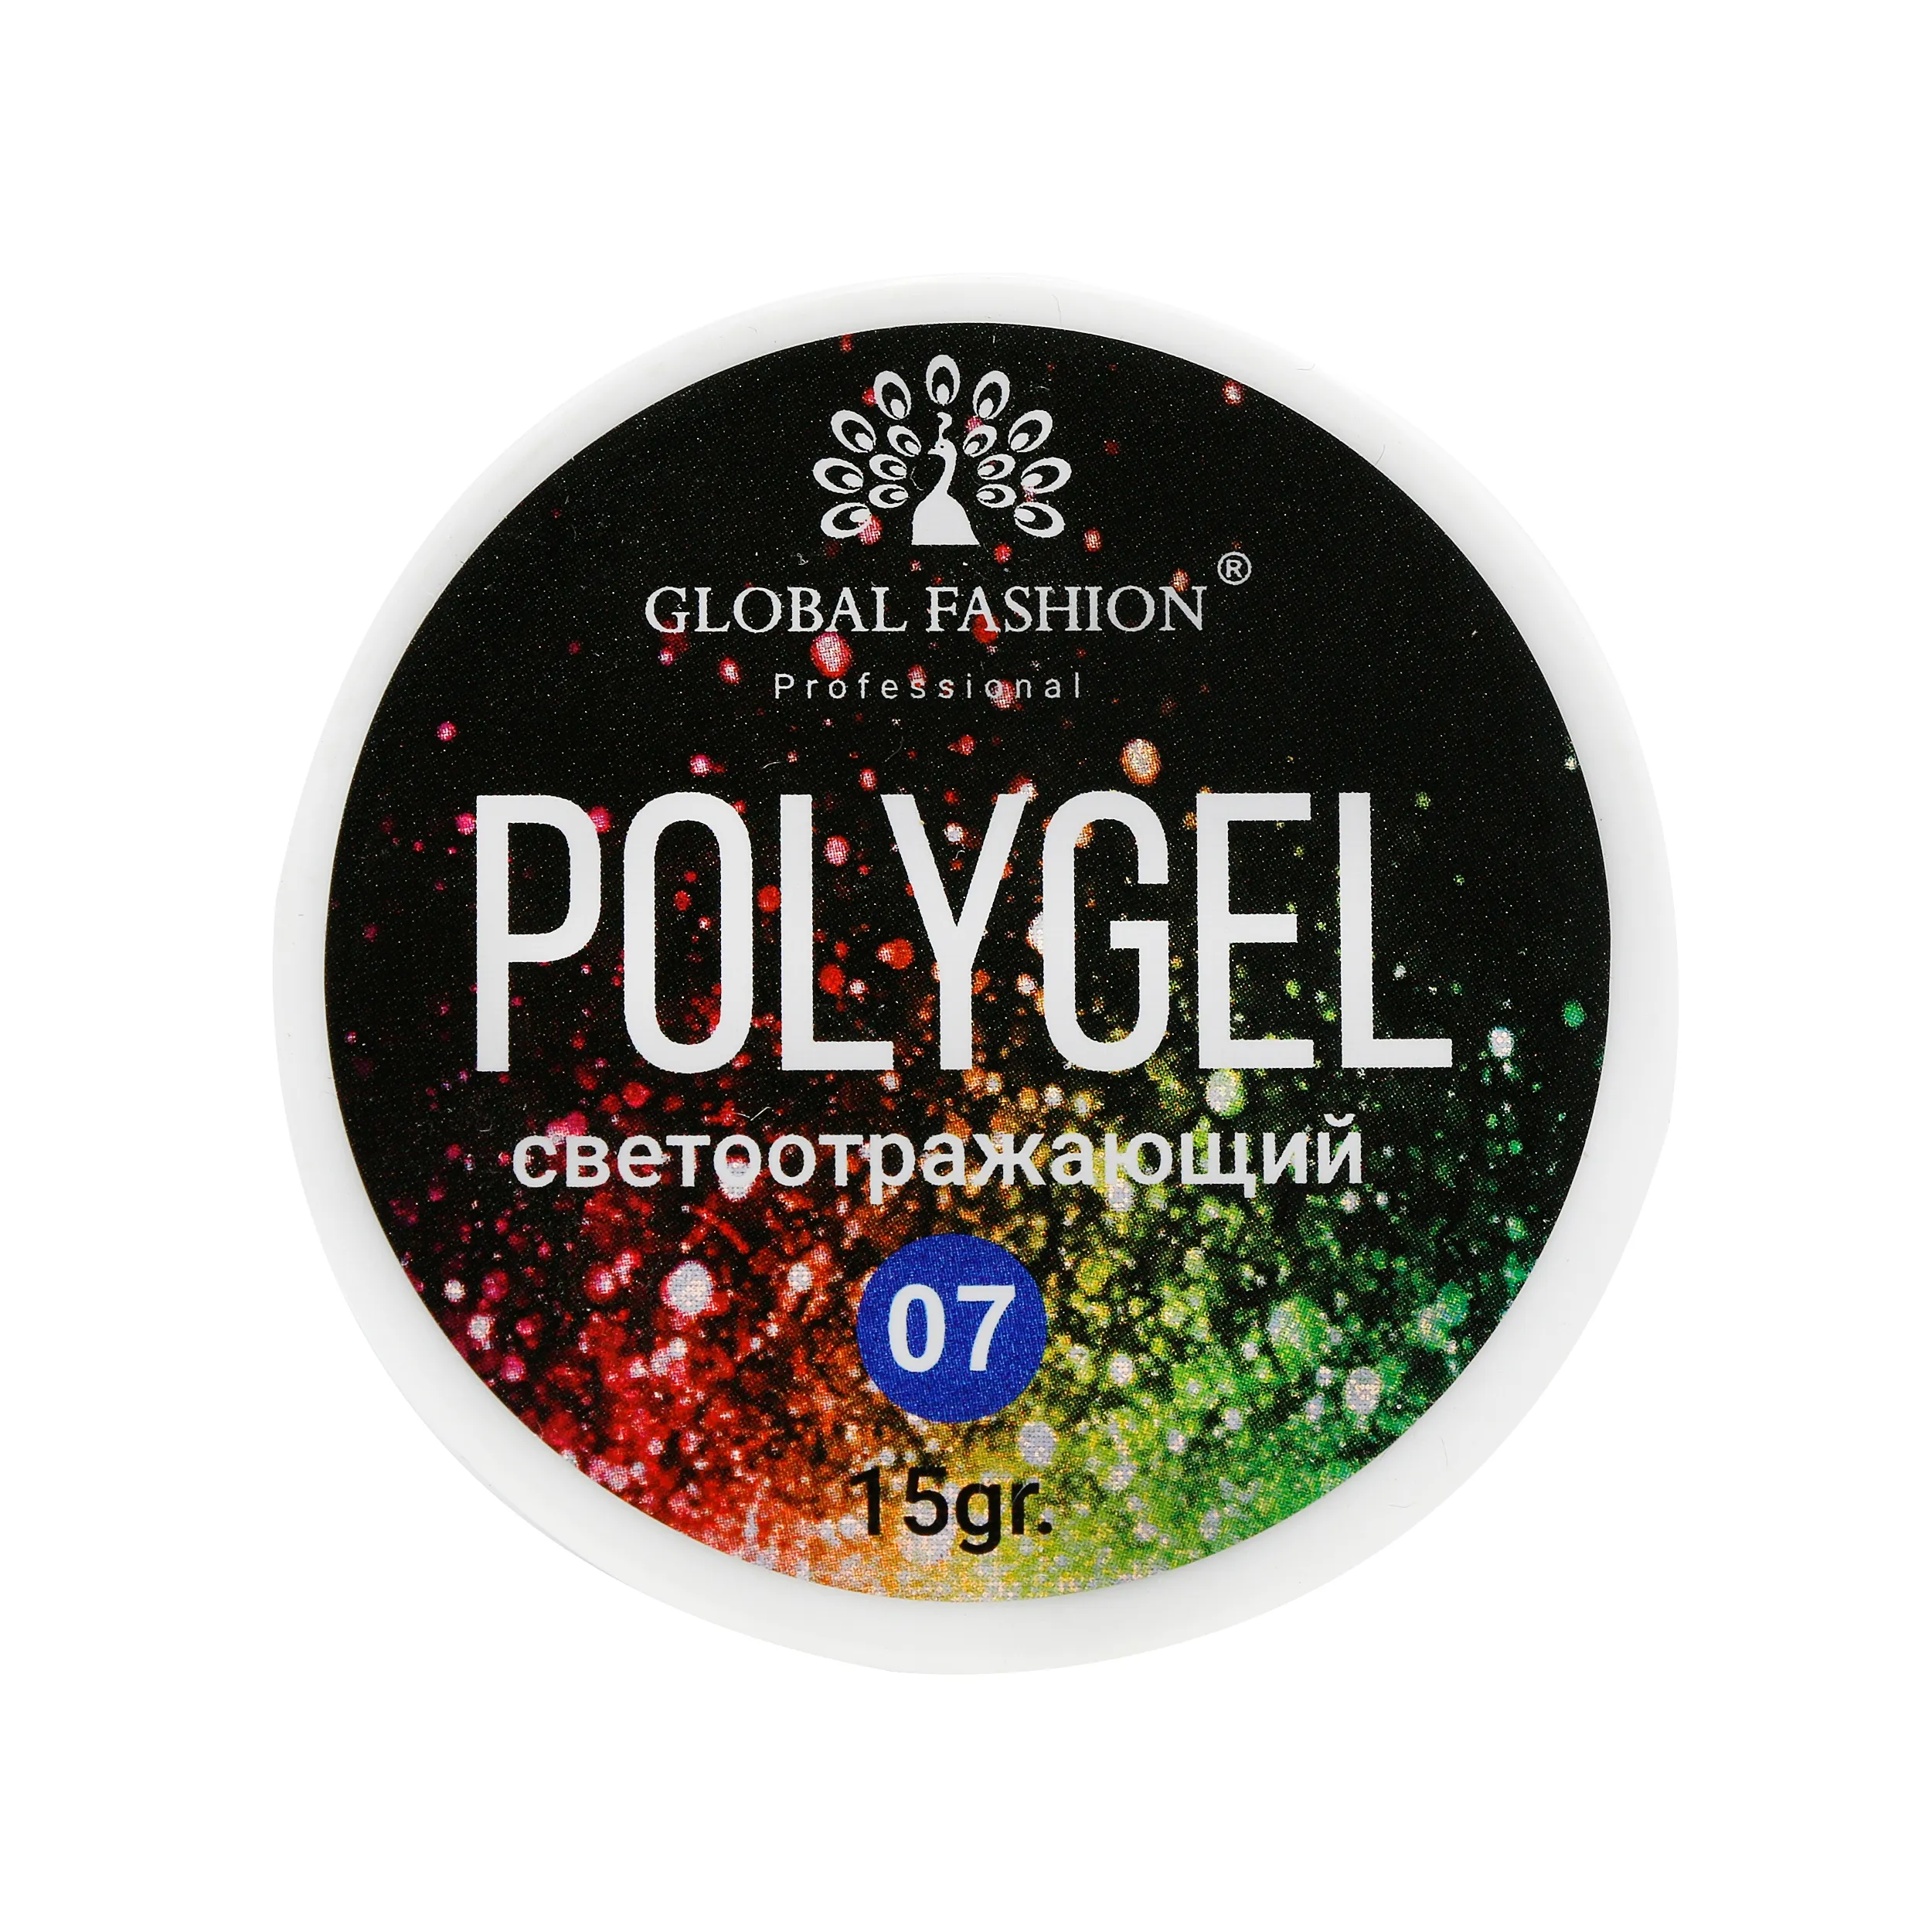 Polygel Reflectiv Global Fashion 15g, 07